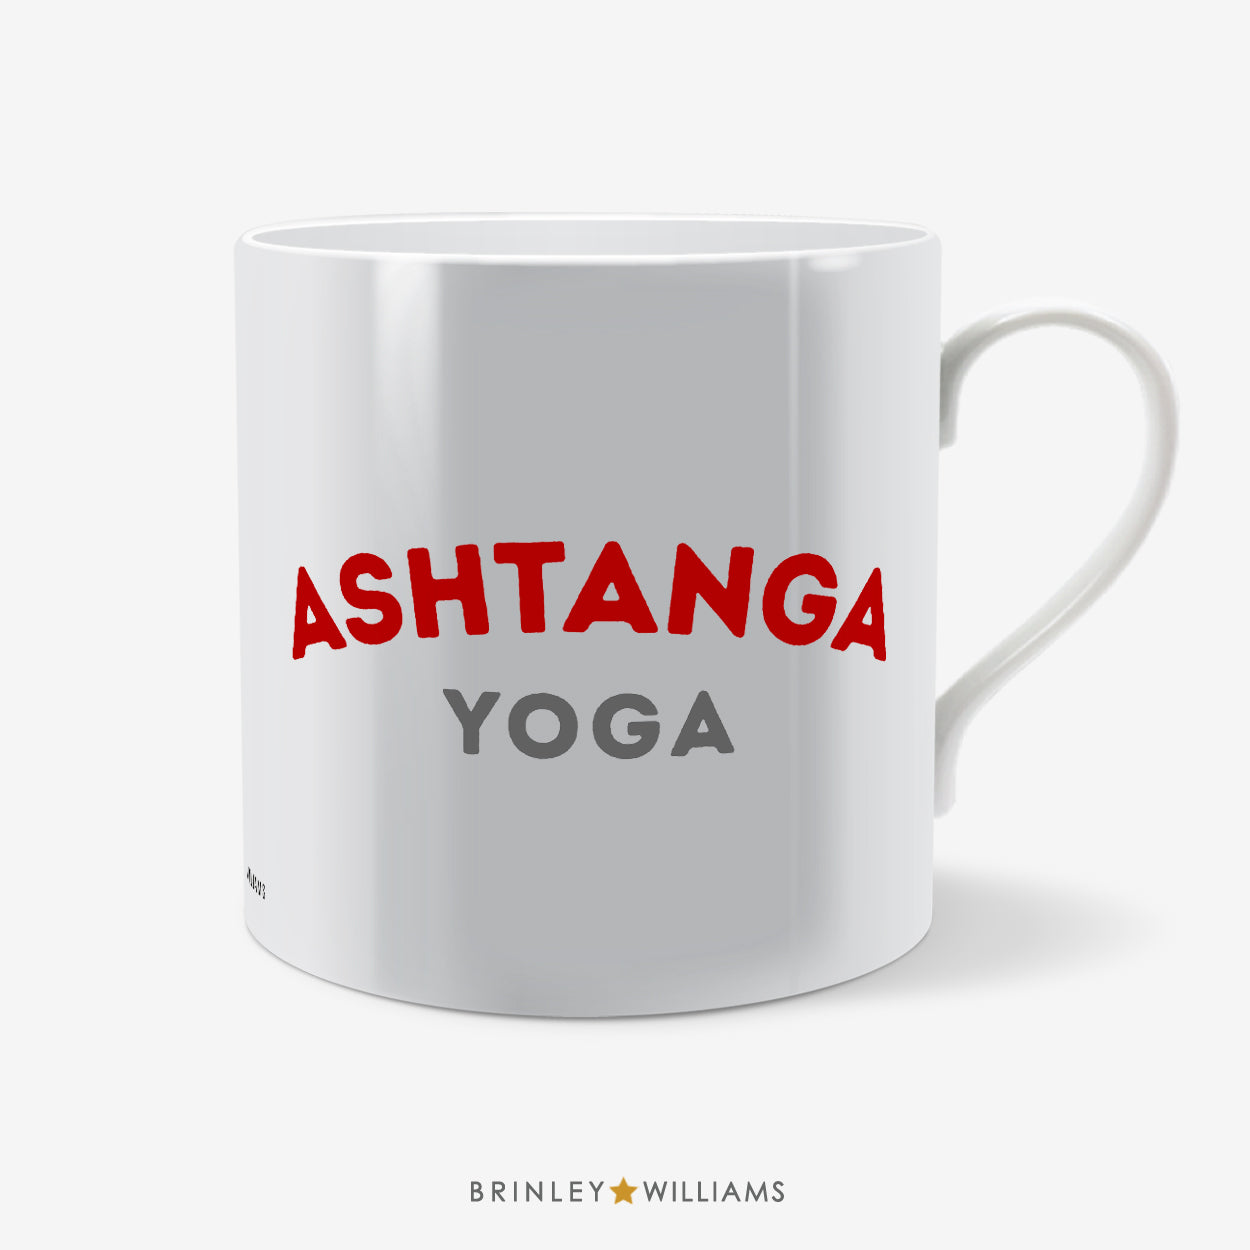 Ashtanga Yoga Mug - Red